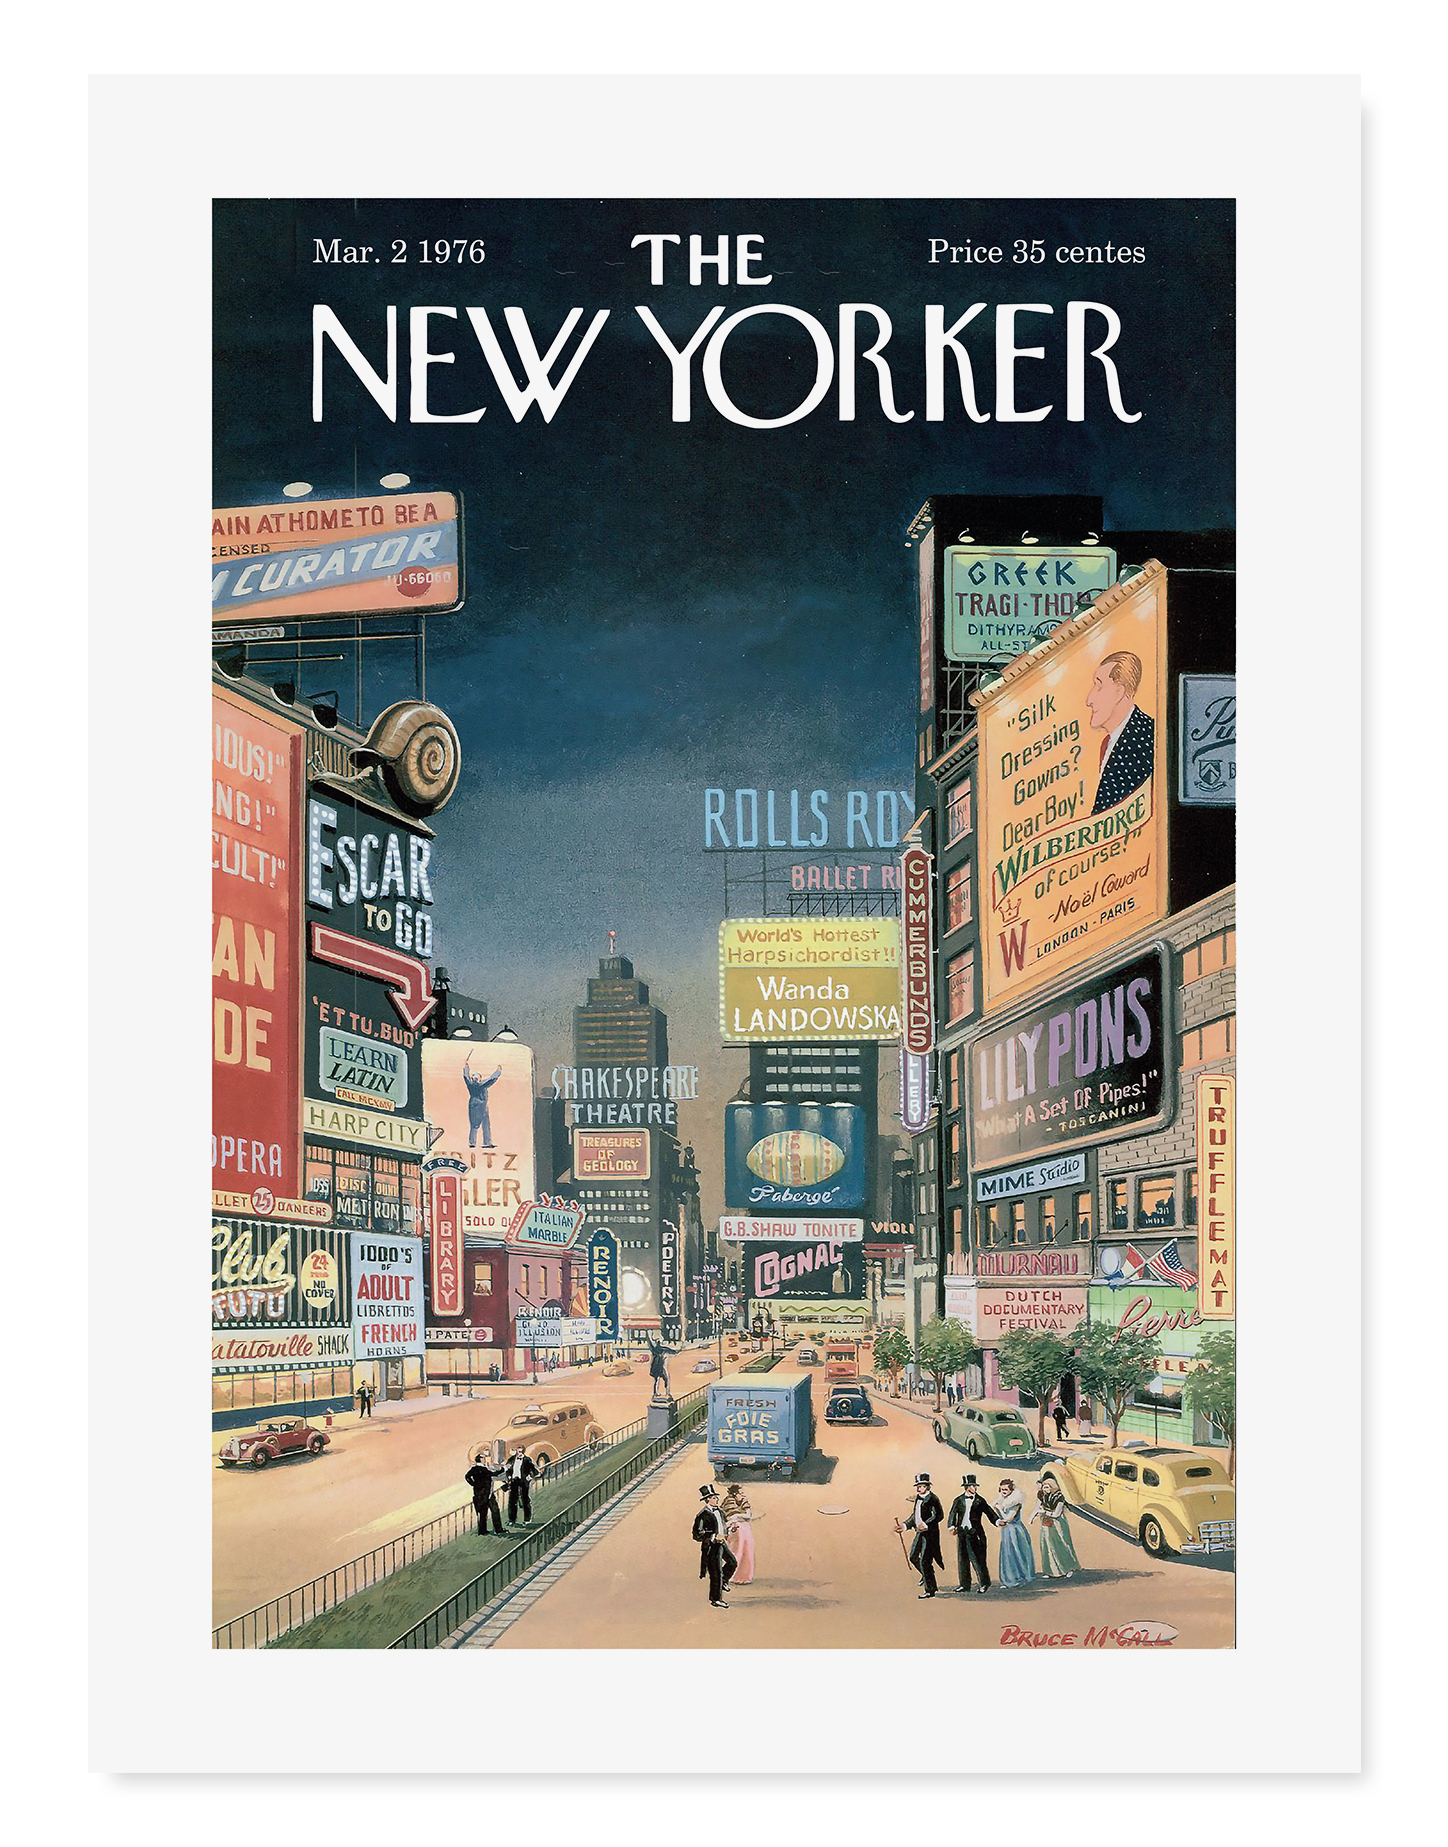 Журнал new yorker. Винтажные обложки журналов New Yorker. The New Yorker обложки Нью Йорк. The New Yorker Magazine обложки. Постеры обложки журналов New Yorker.